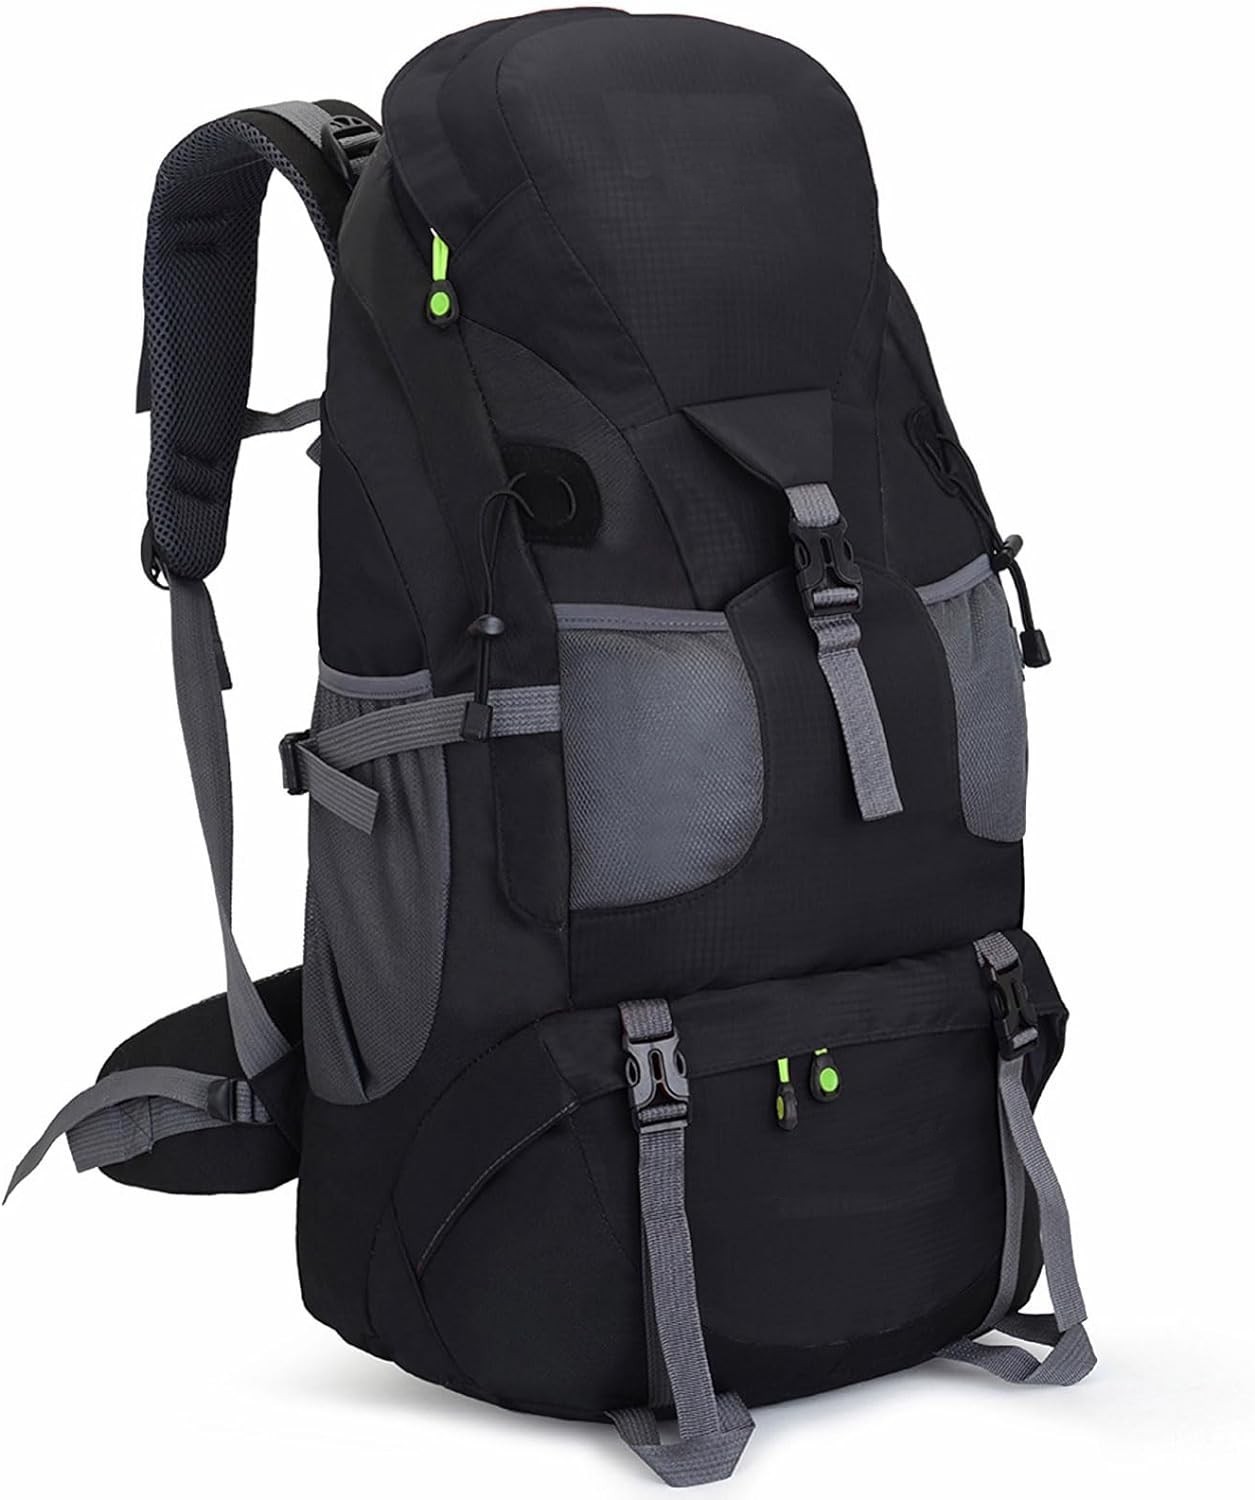 Customized Sport Travel Hiking Shoulder Daypacks Camping Hiking Backpack bag for Outdoor Travel